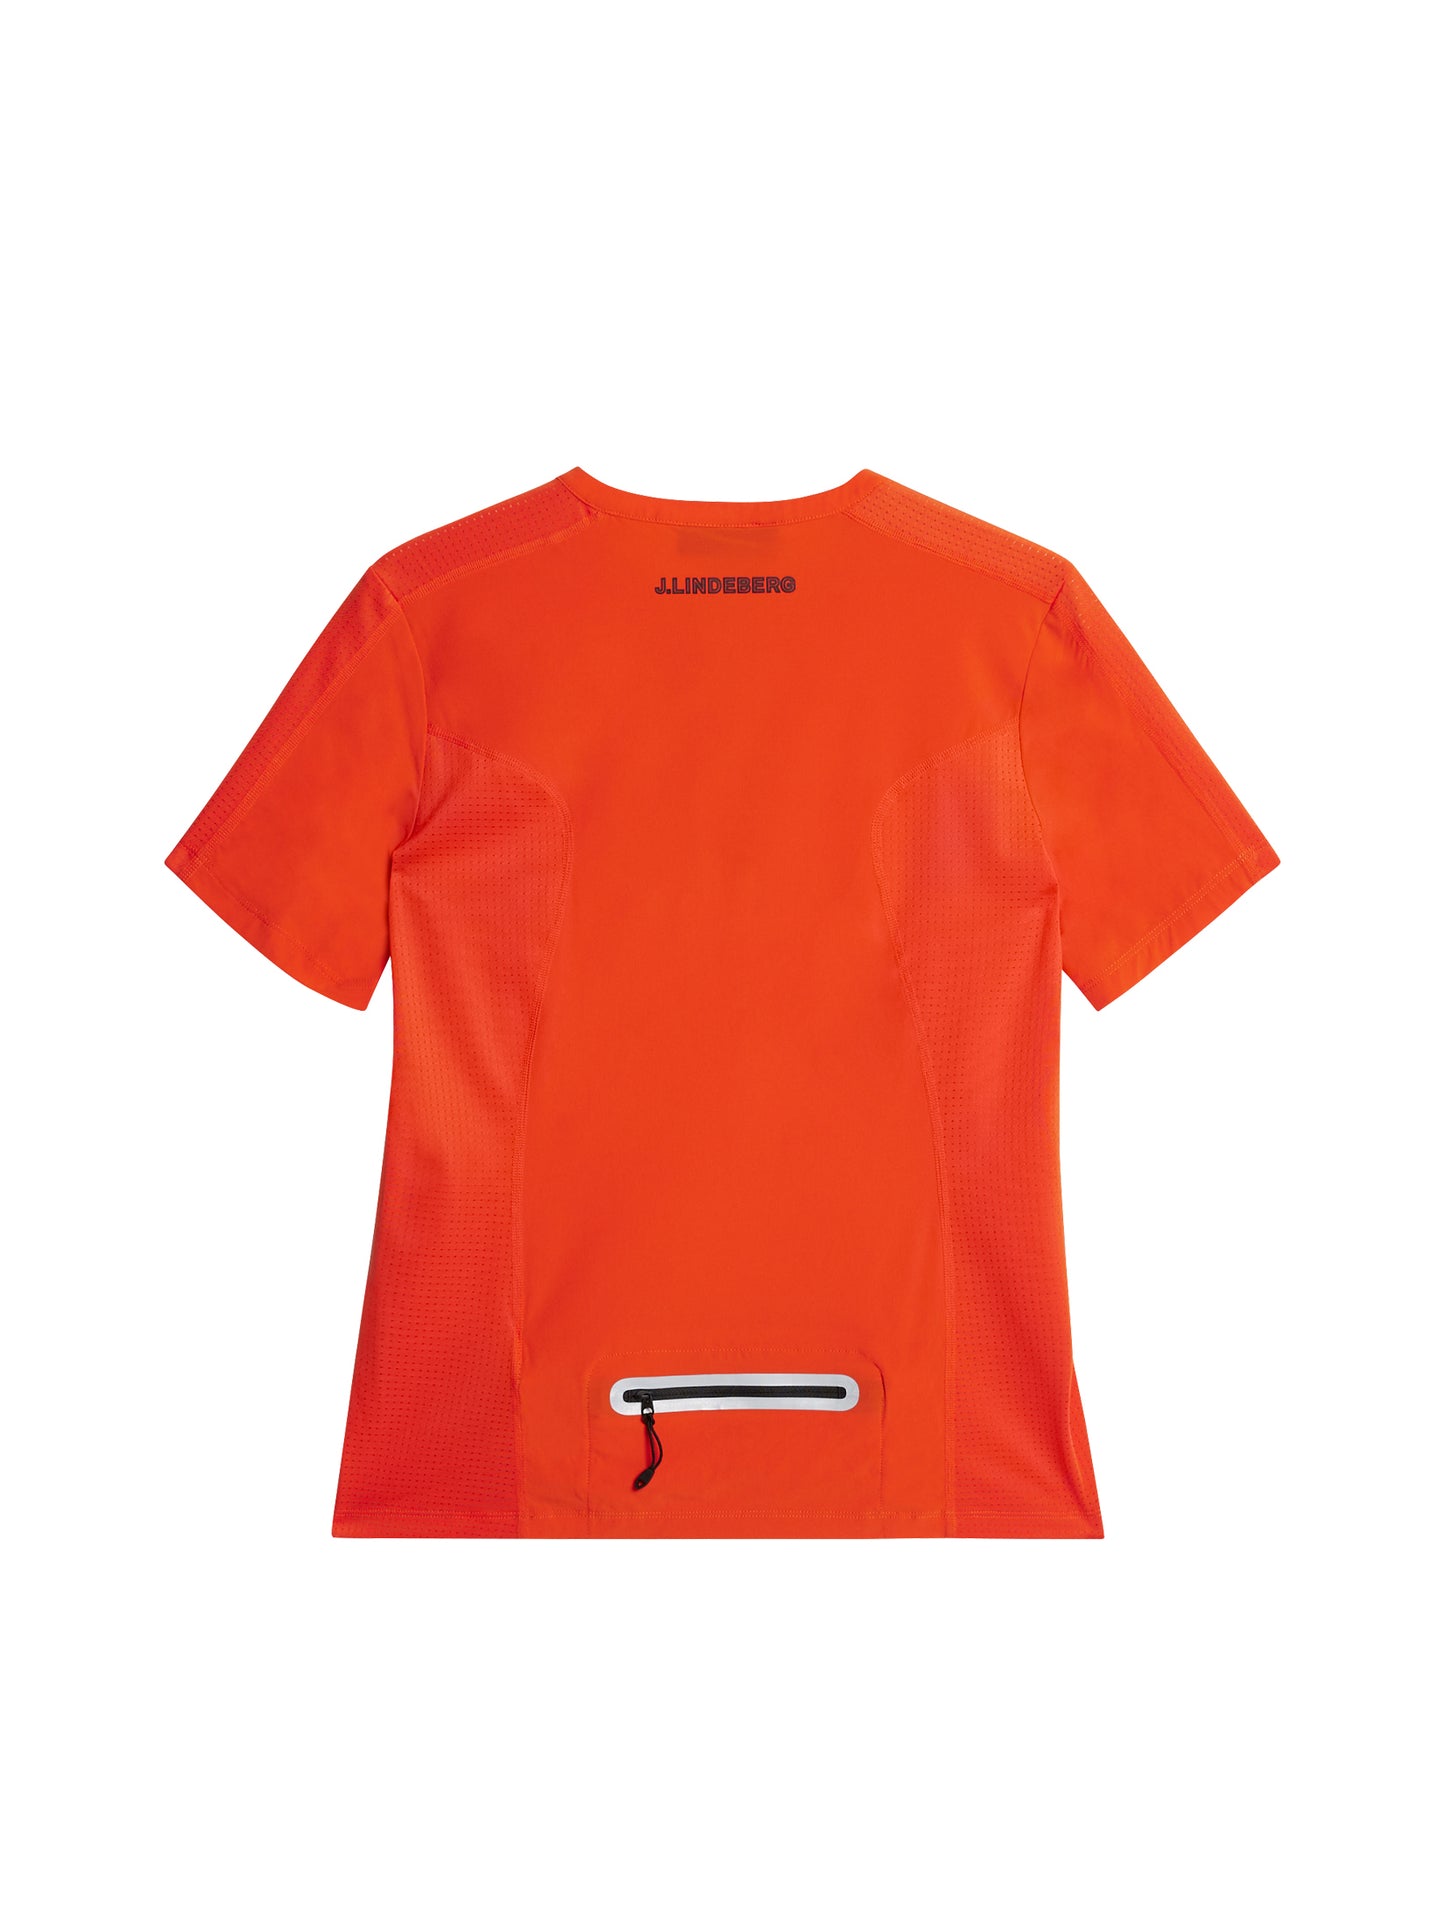 Landa Pro Pack T-shirt / Tangerine Tango